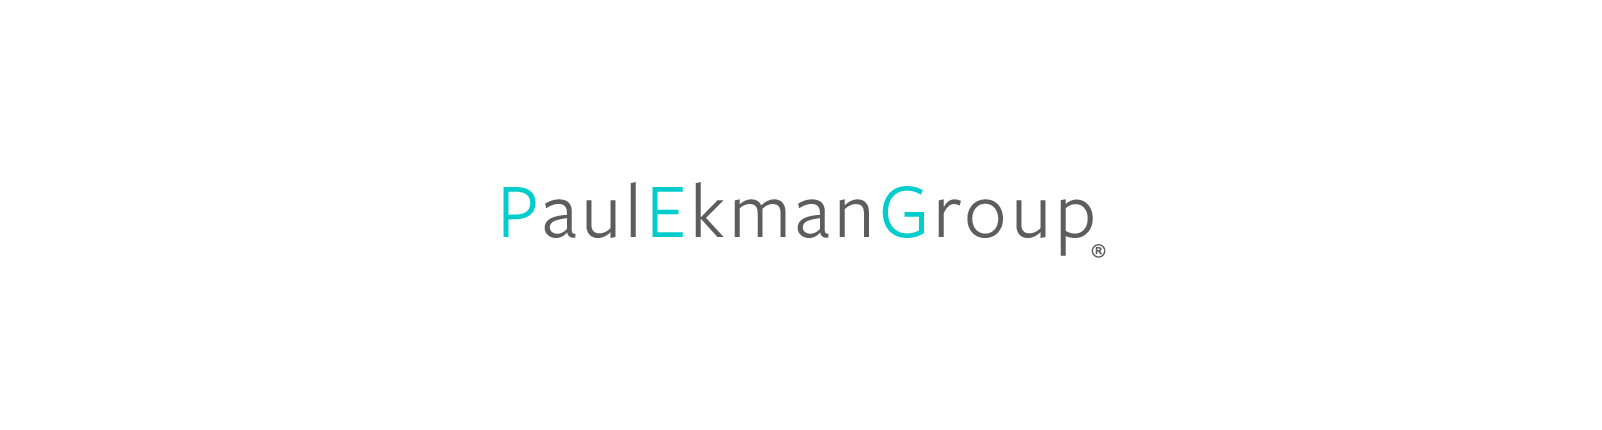 Paul ekman group